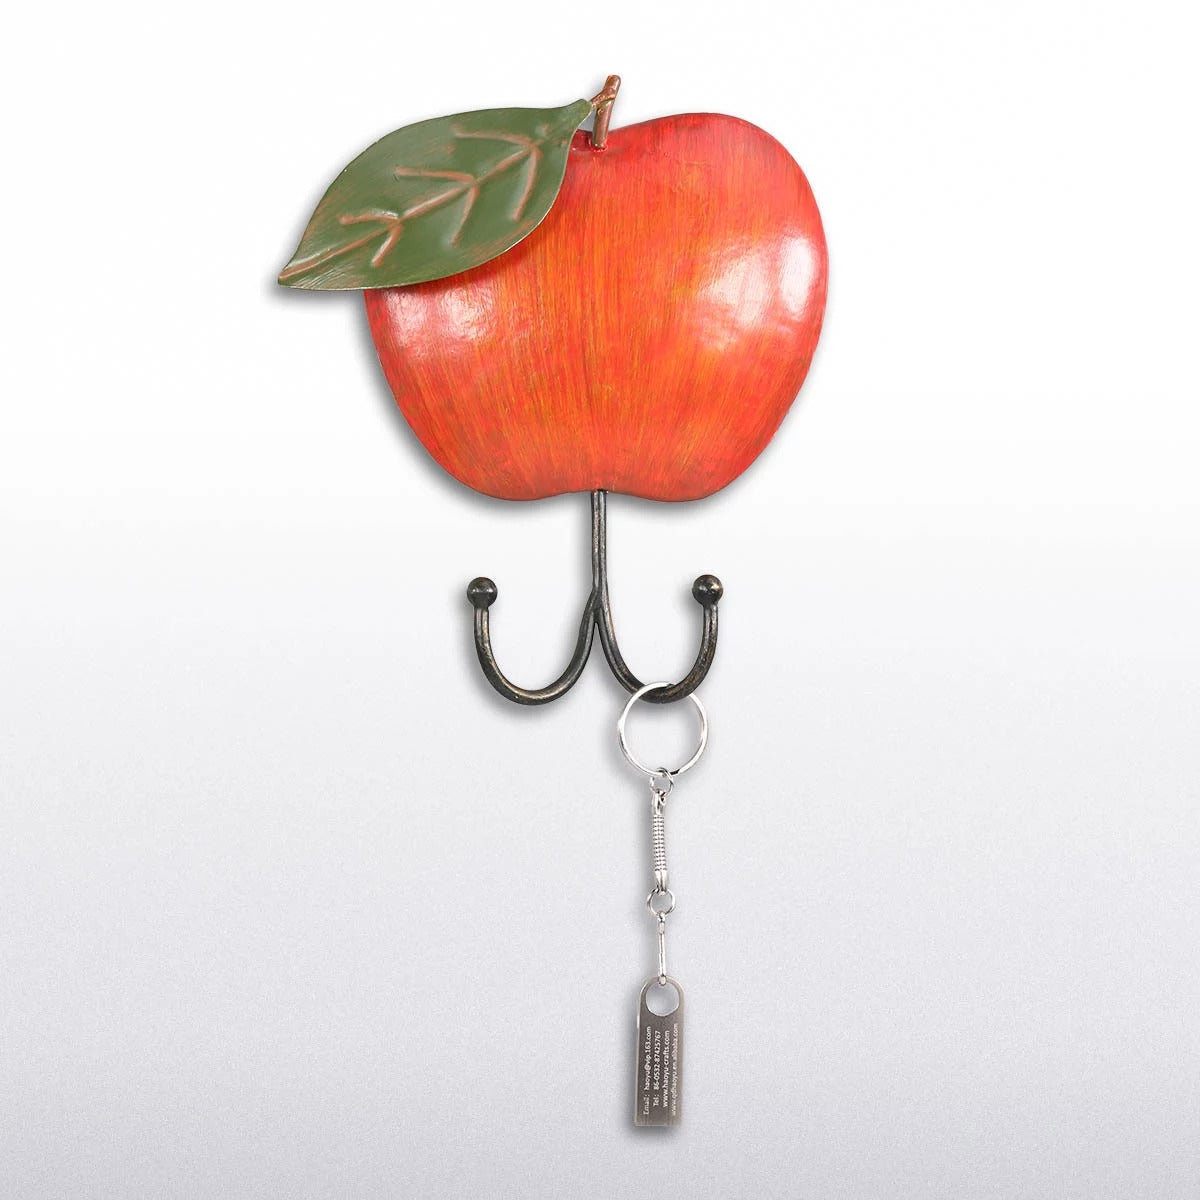 Apple Metal Wall Hook For Keys, Bags, Coats